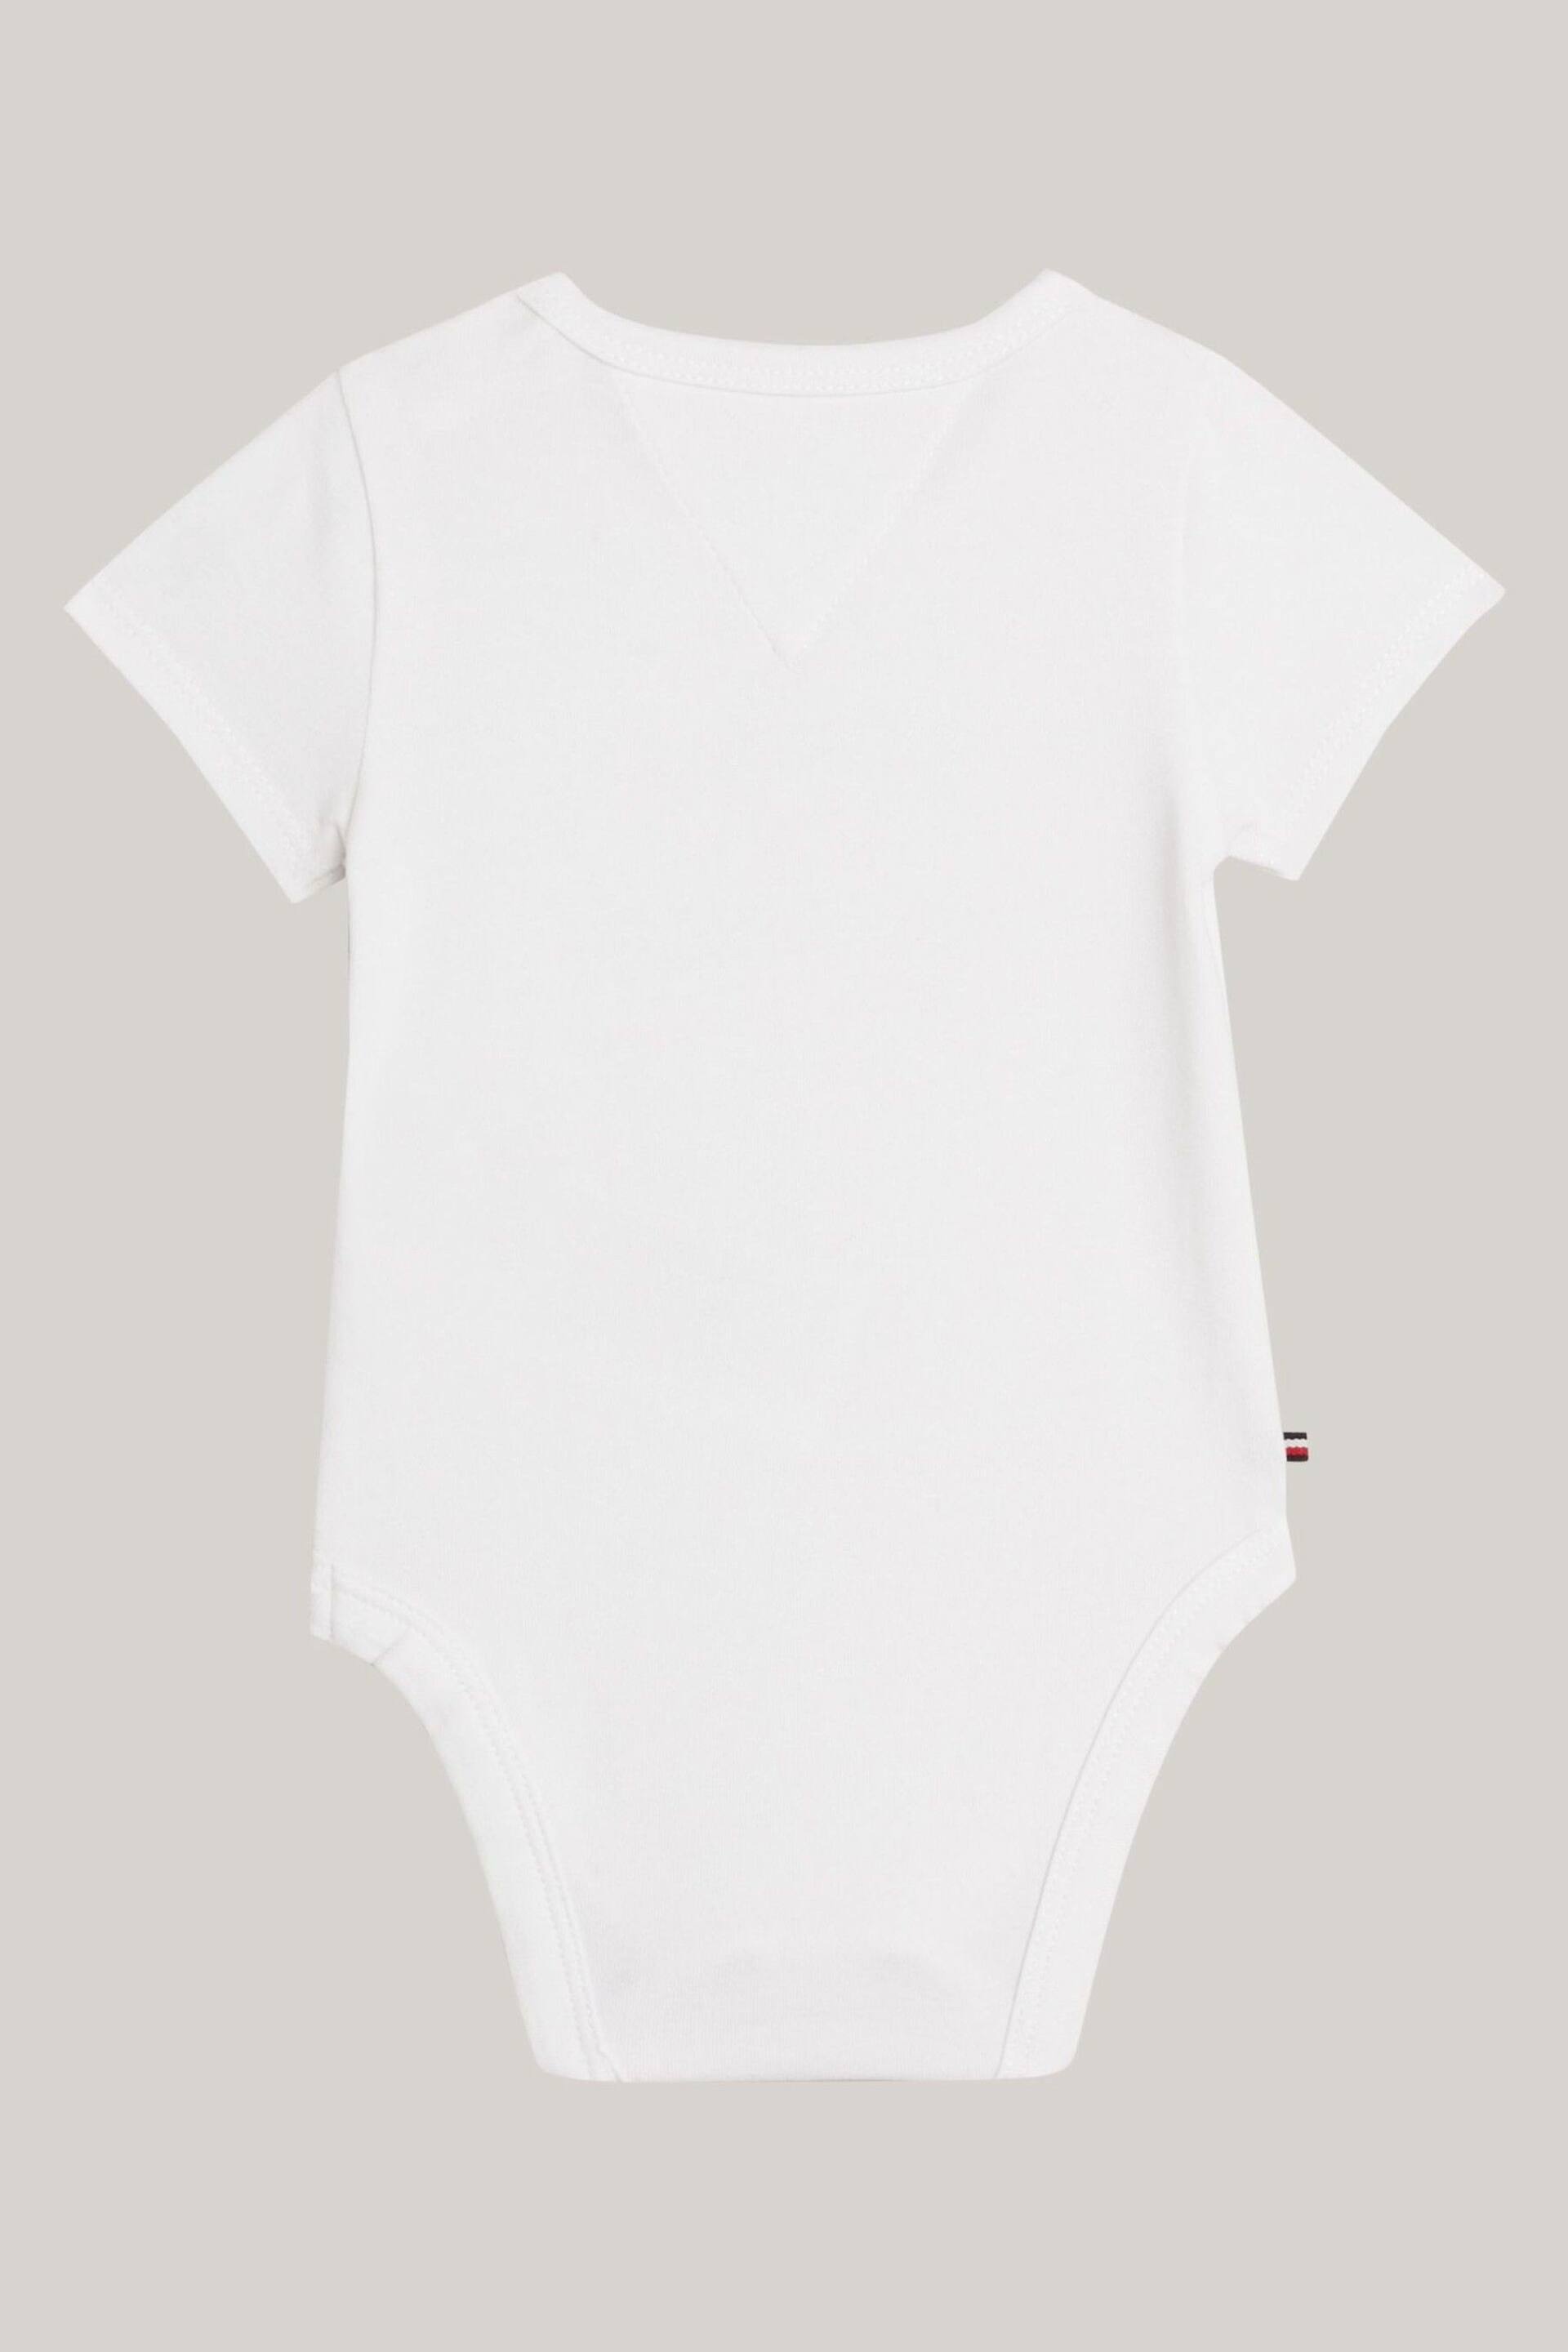 Tommy Hilfiger Baby Logo White Bodysuit - Image 2 of 3